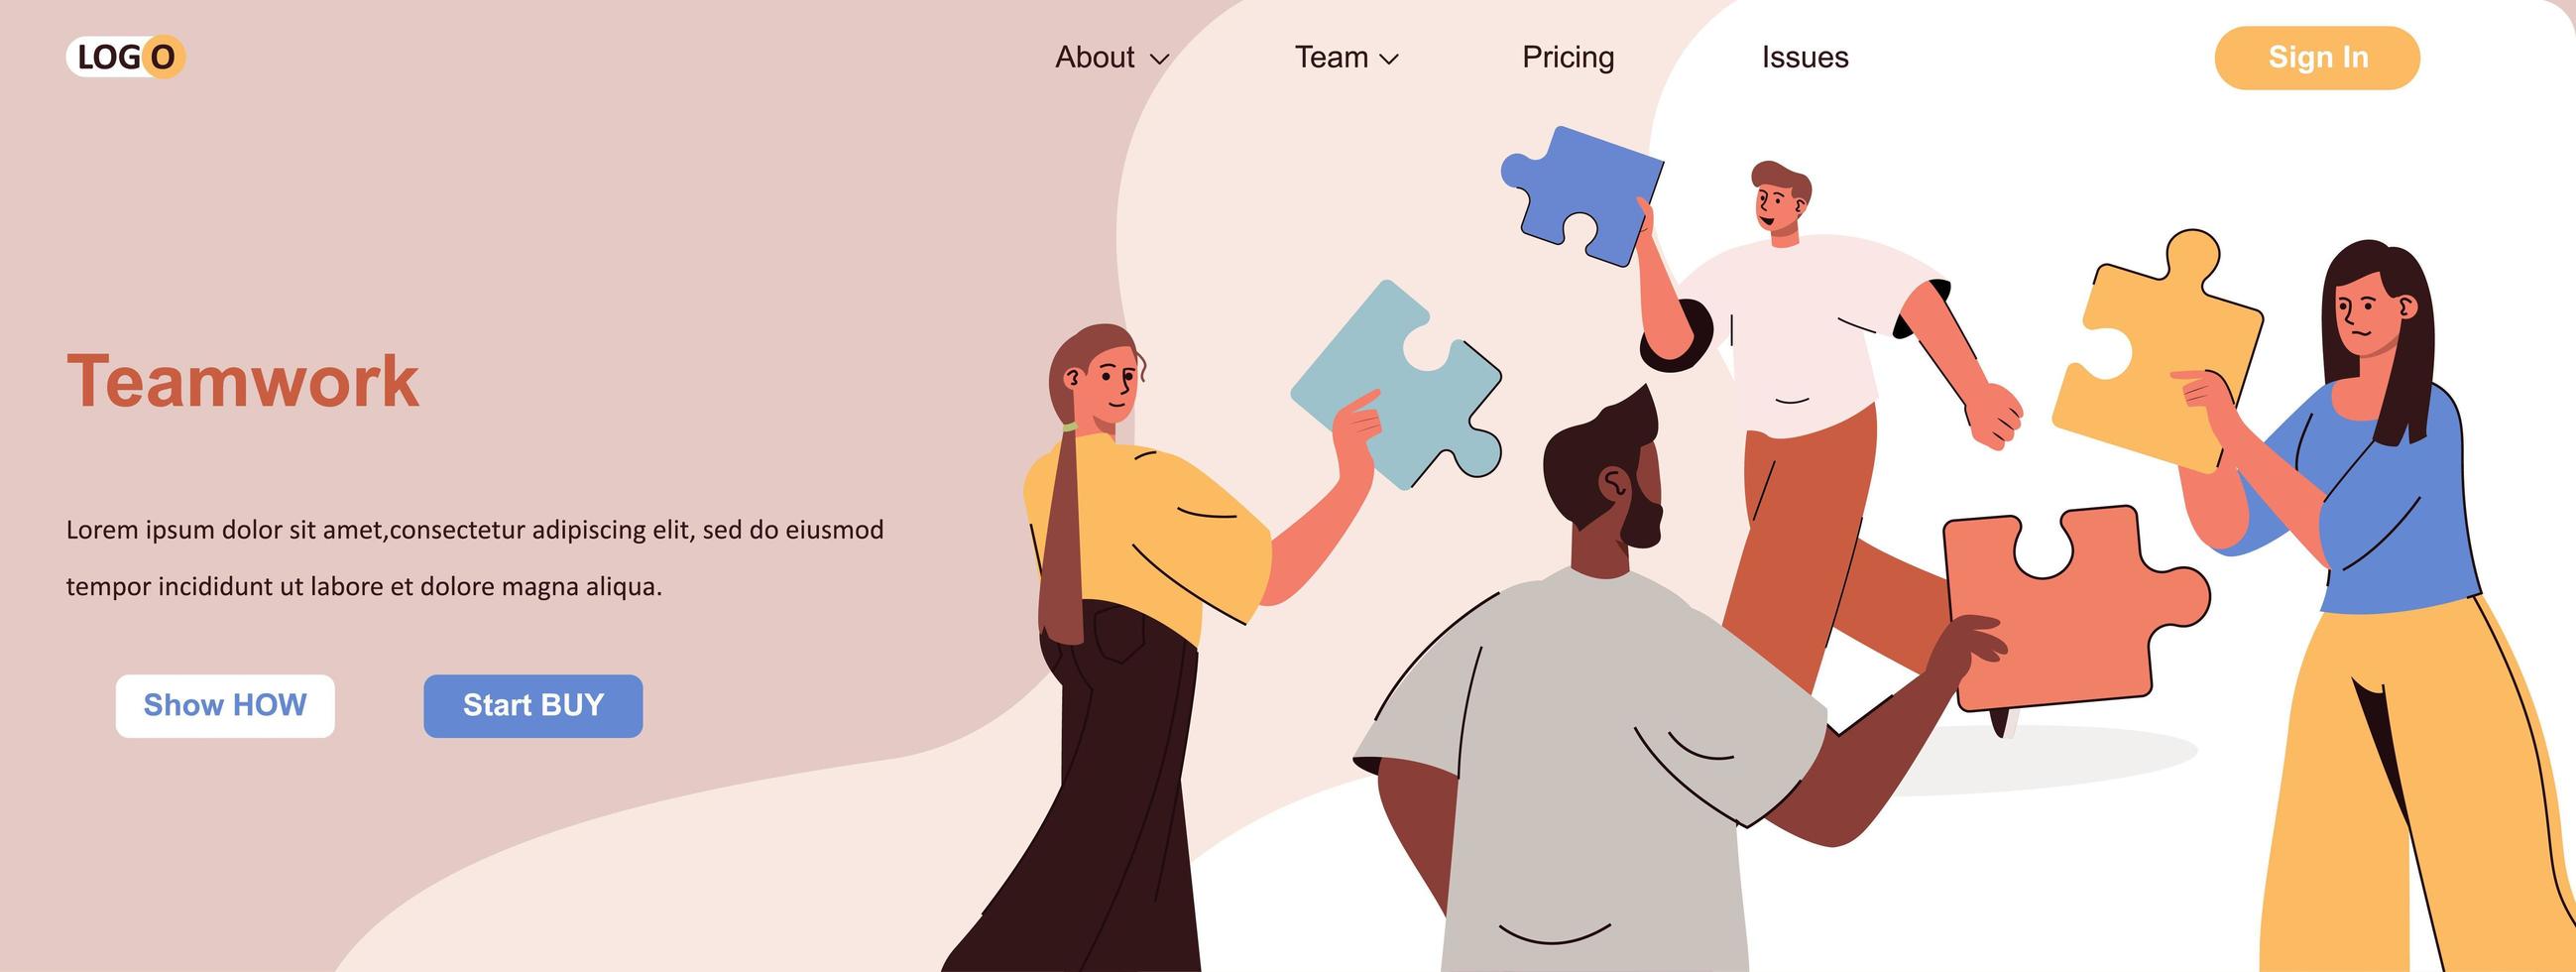 Teamwork web banner for social media promotional materials vector